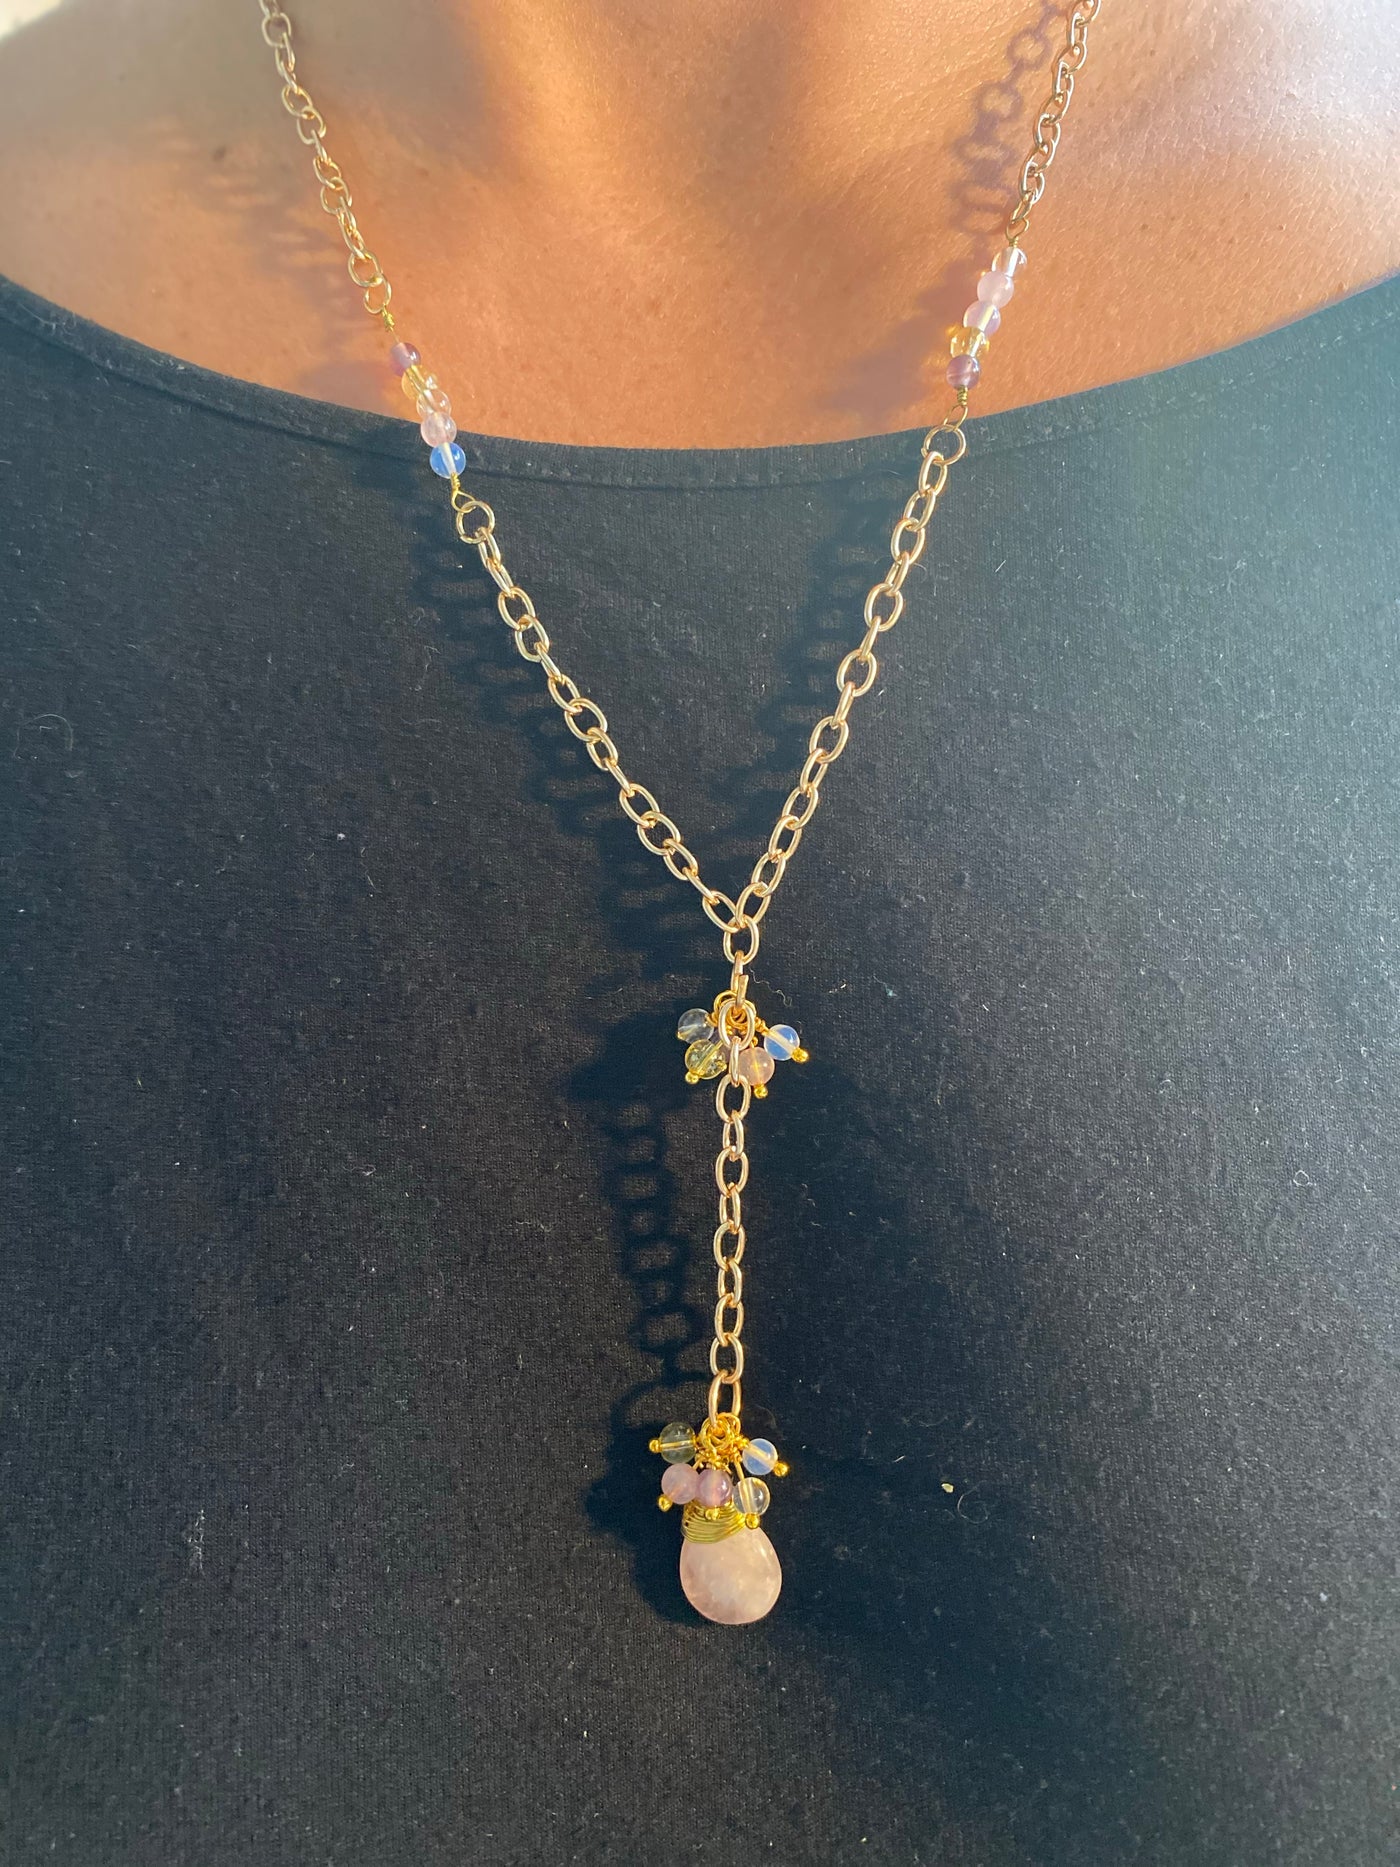 Necklace: Cherry blossom rose quartz, citrina amethyst, opalyte and white quartz in copper wire